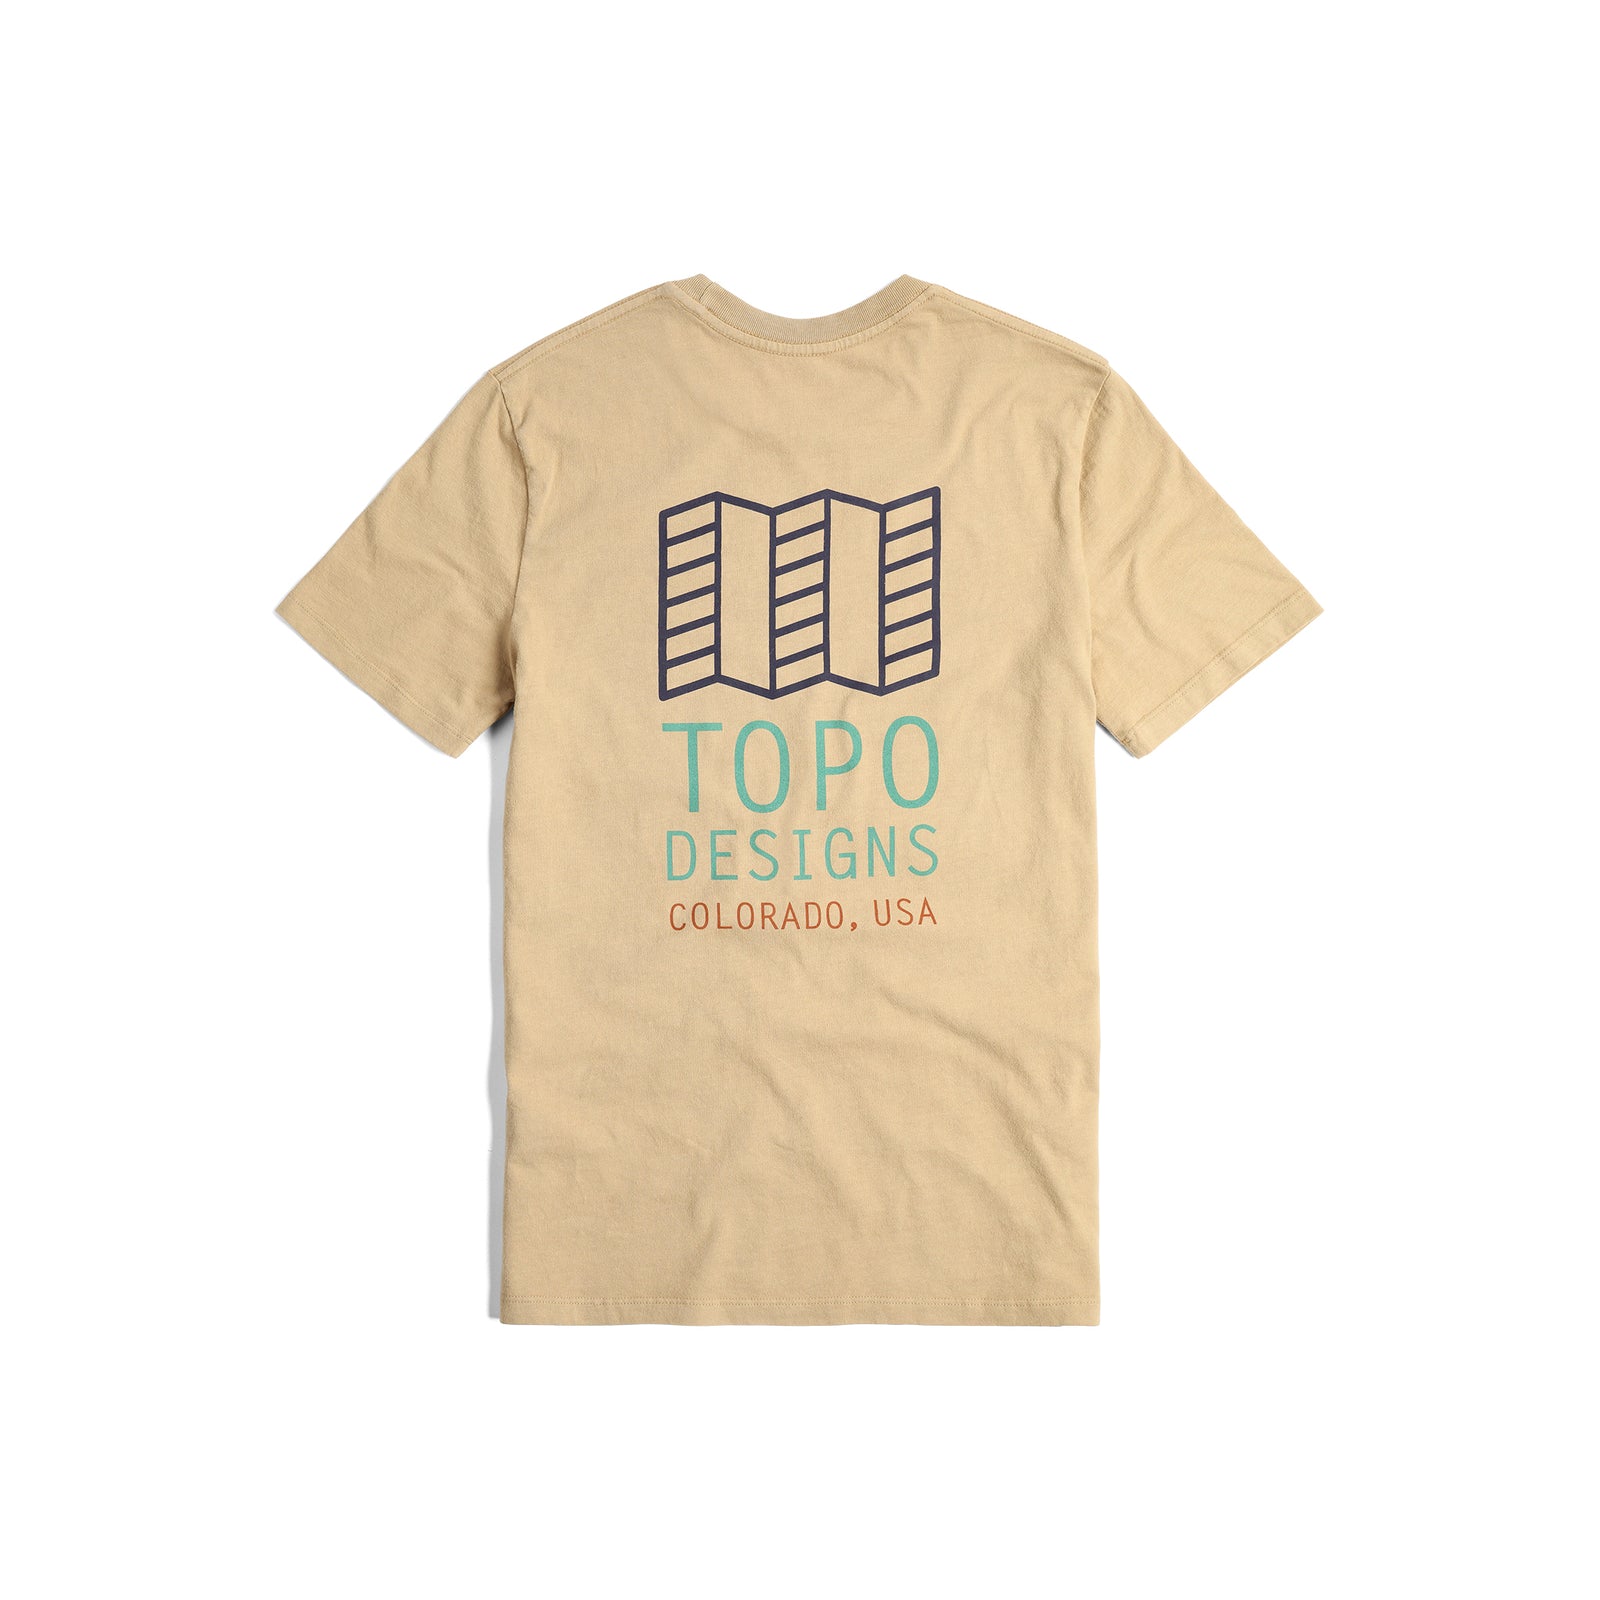 Back View of Topo Designs Small Original Logo Tee - Men's in "Sahara"